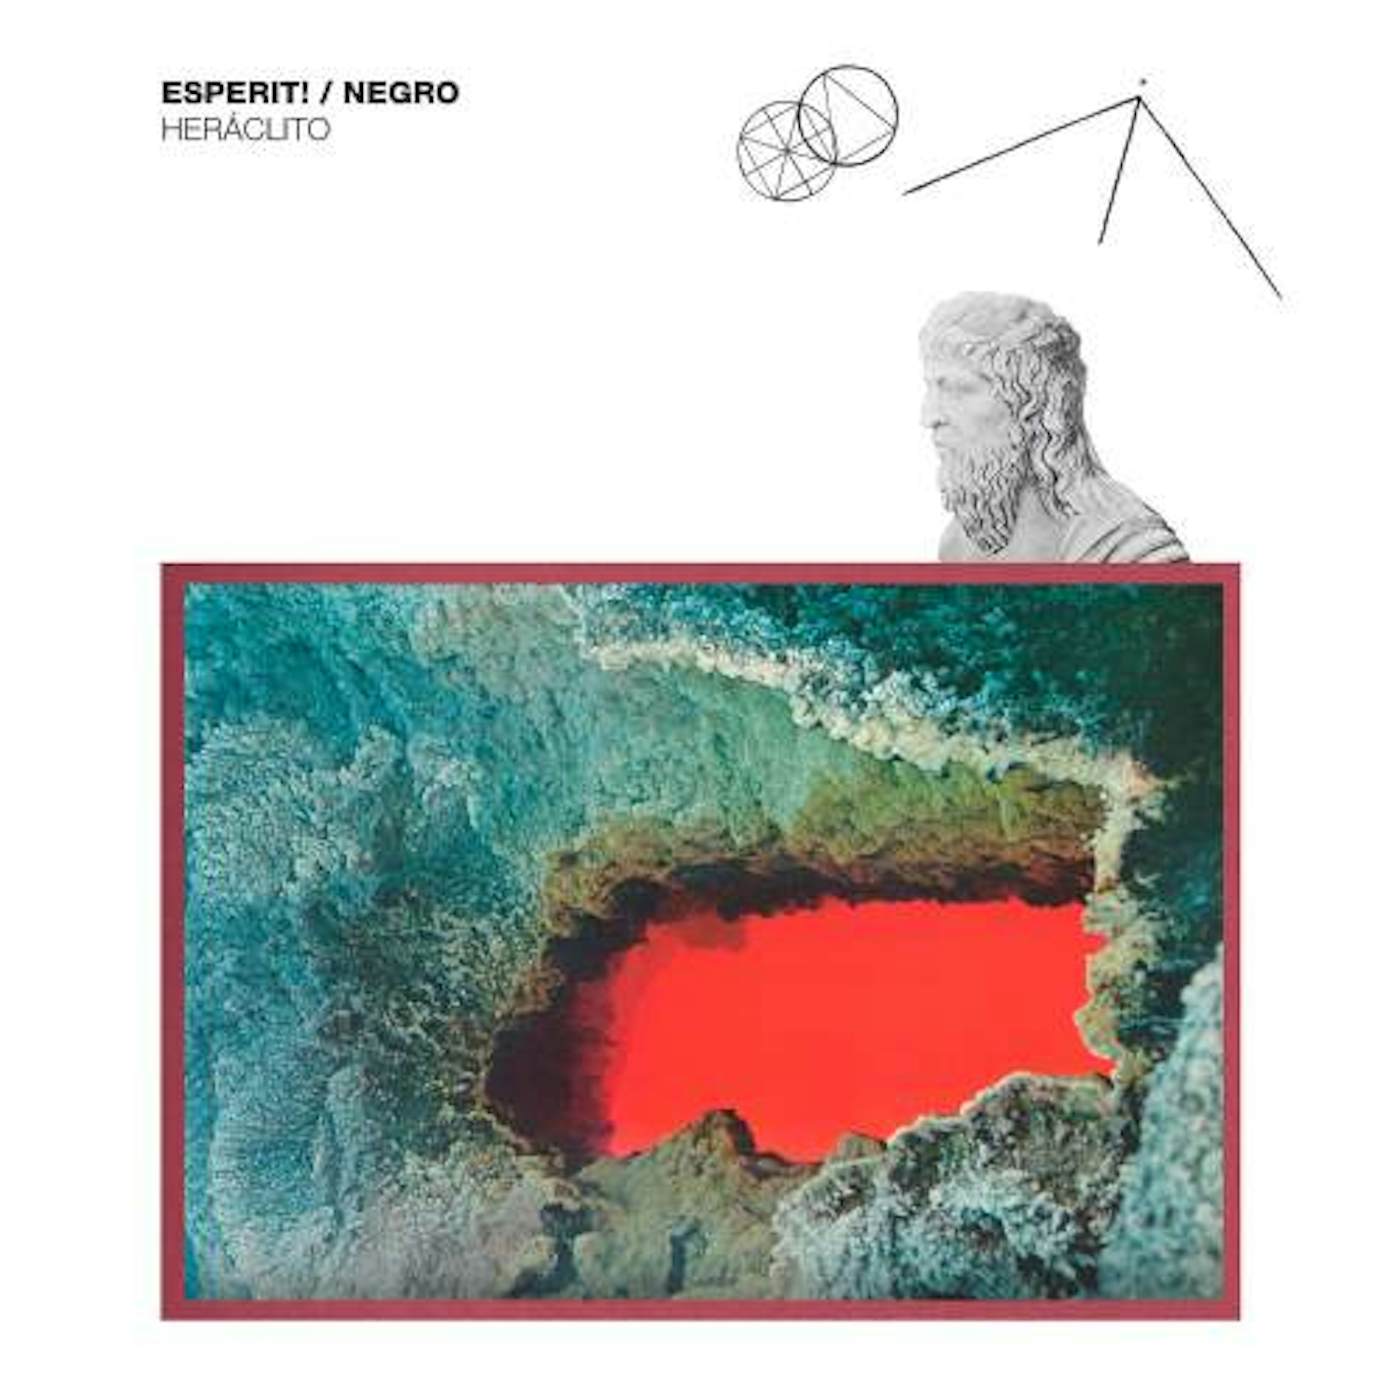 ESPIRIT! / NEGRO HERACLITO (SPLIT) Vinyl Record